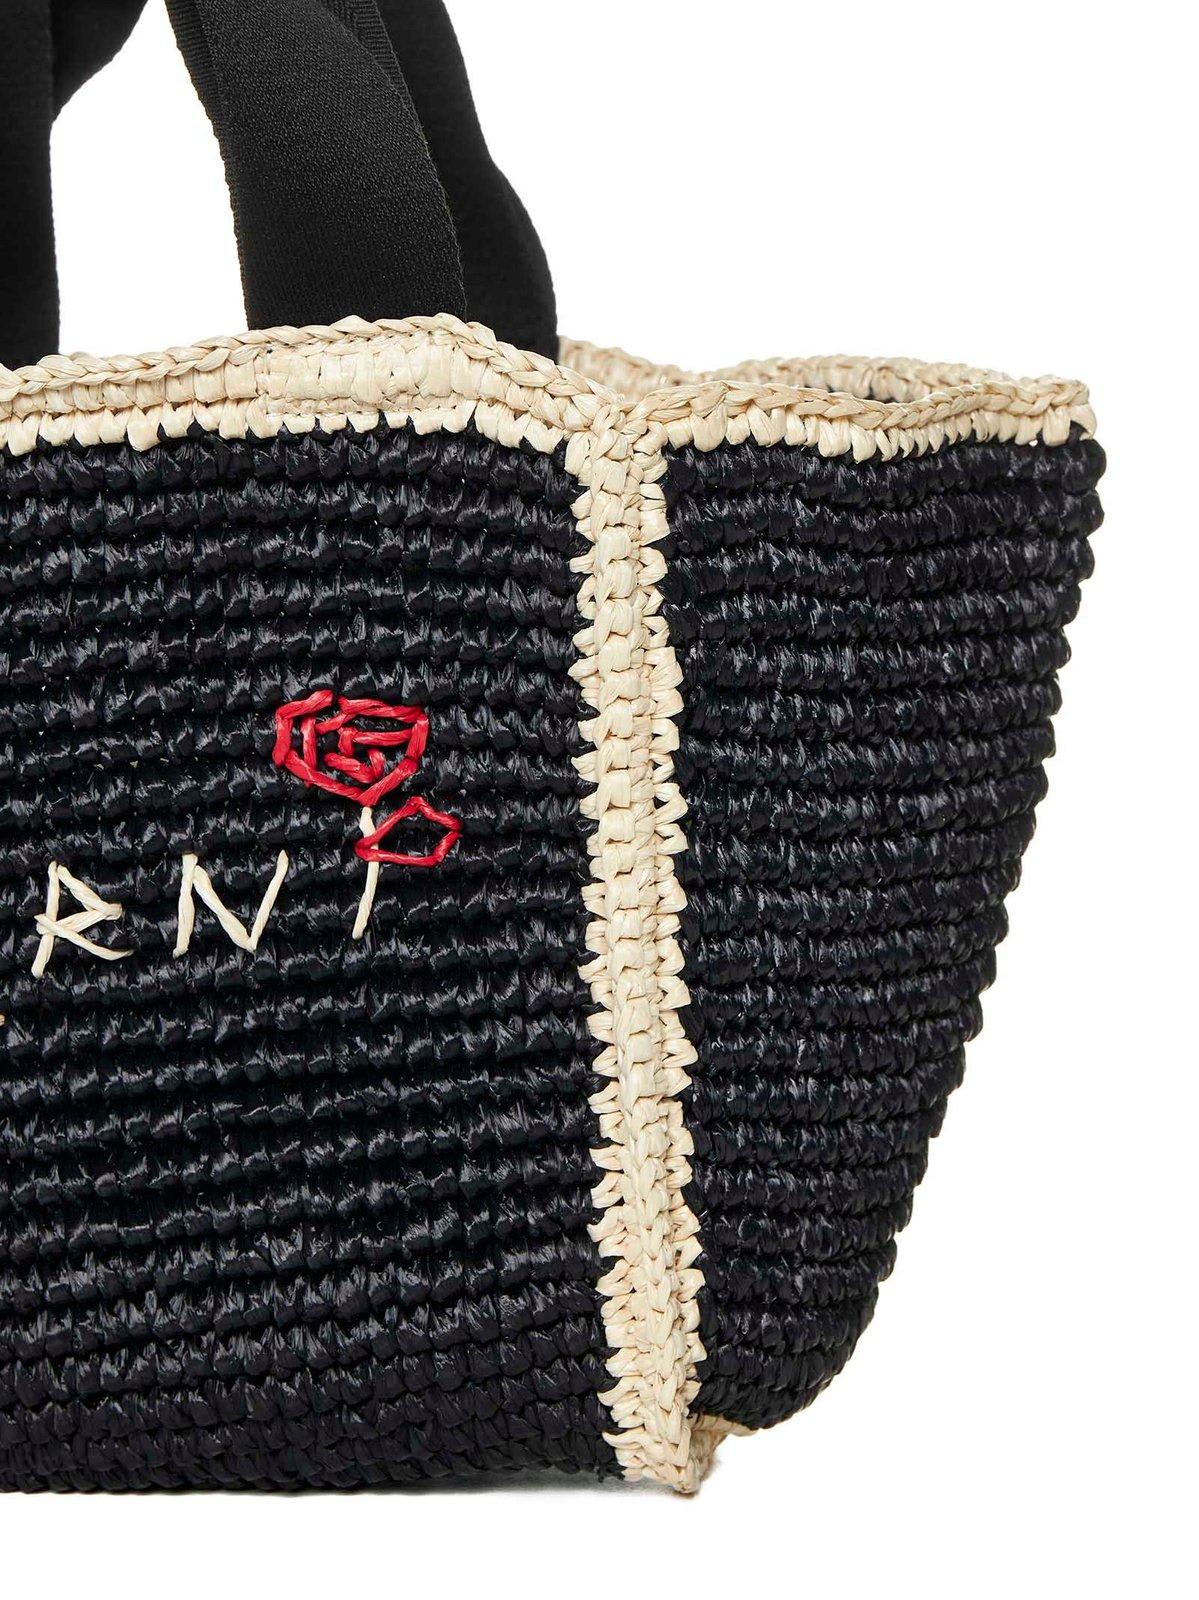 Shop Marni Logo Embroidered Woven Top Handle Tote In Nero/bianco